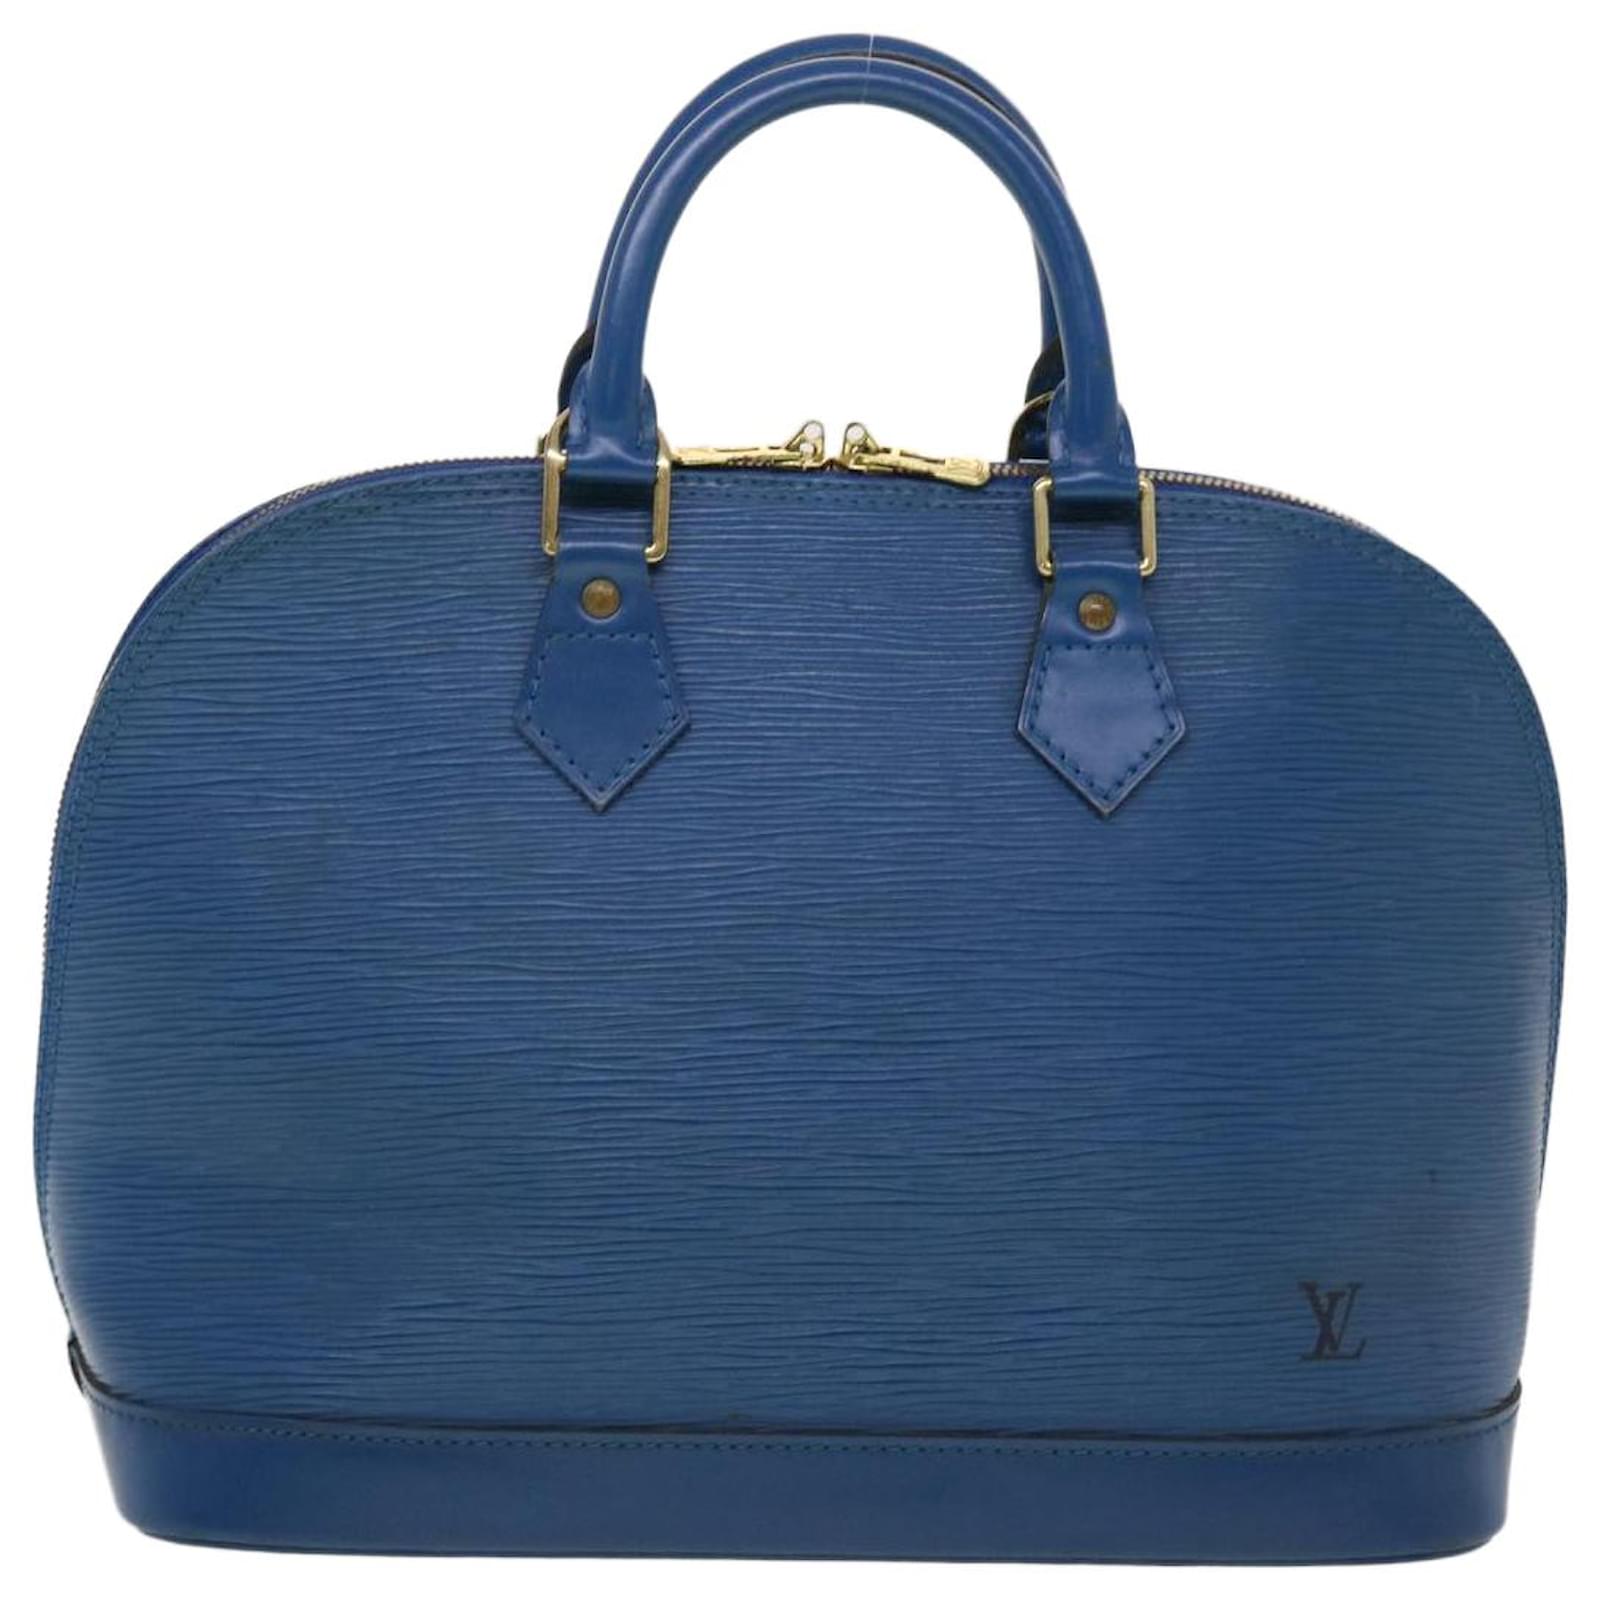 Louis Vuitton Alma small model handbag in vanilla yellow epi leather